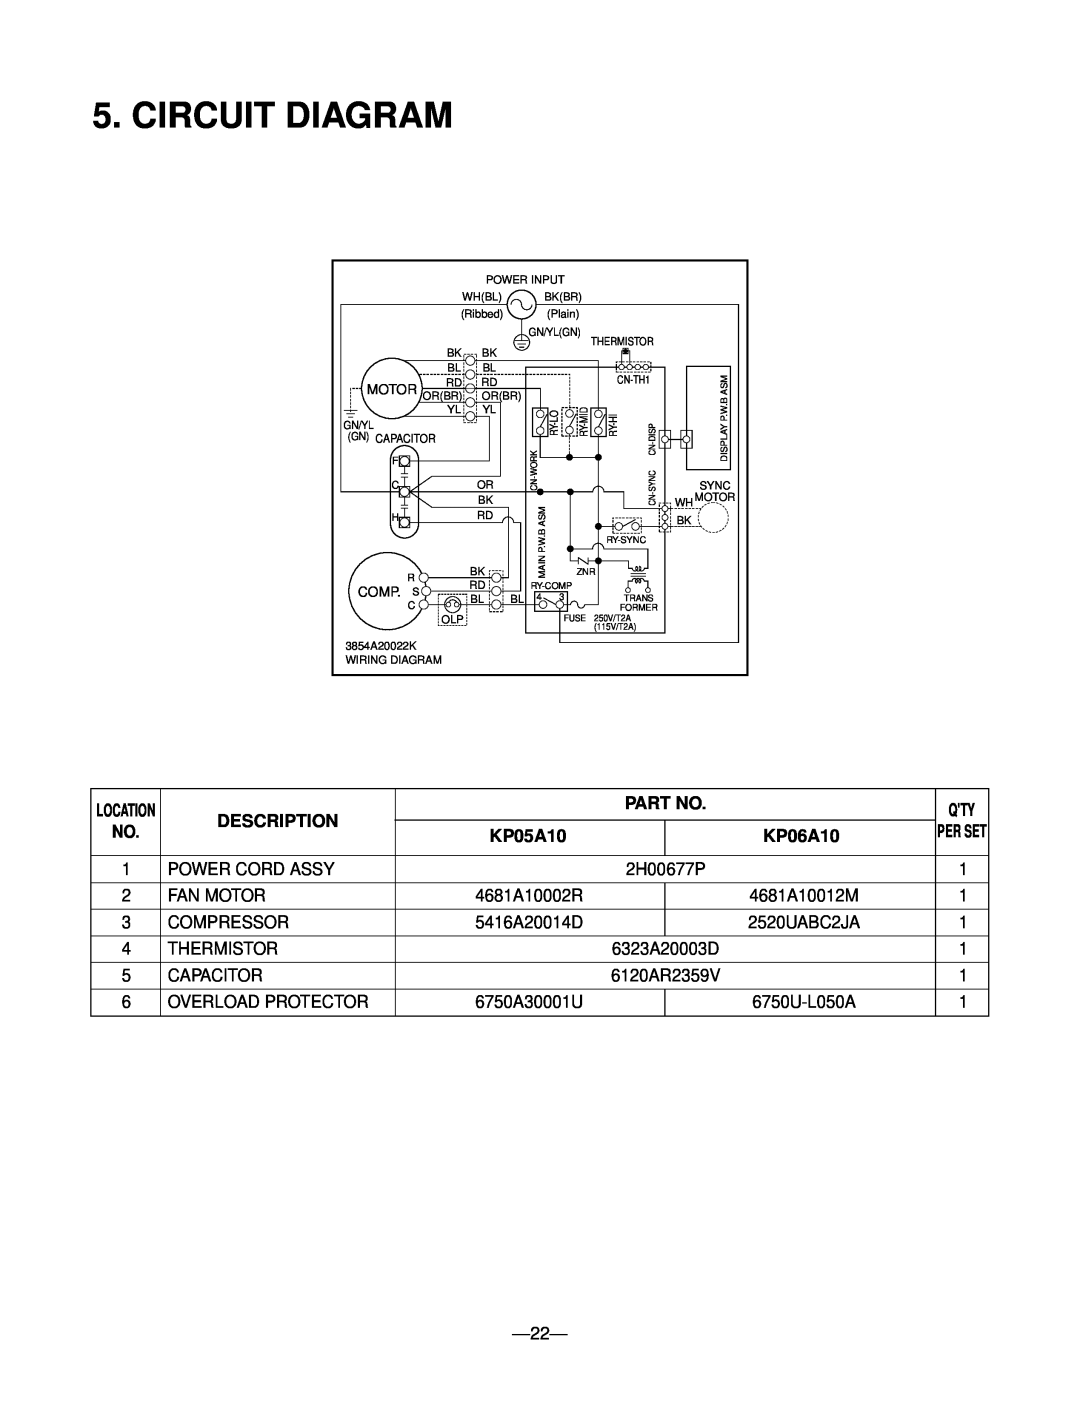 Friedrich KP05A10 KP06A10 manual Circuit Diagram, Description 